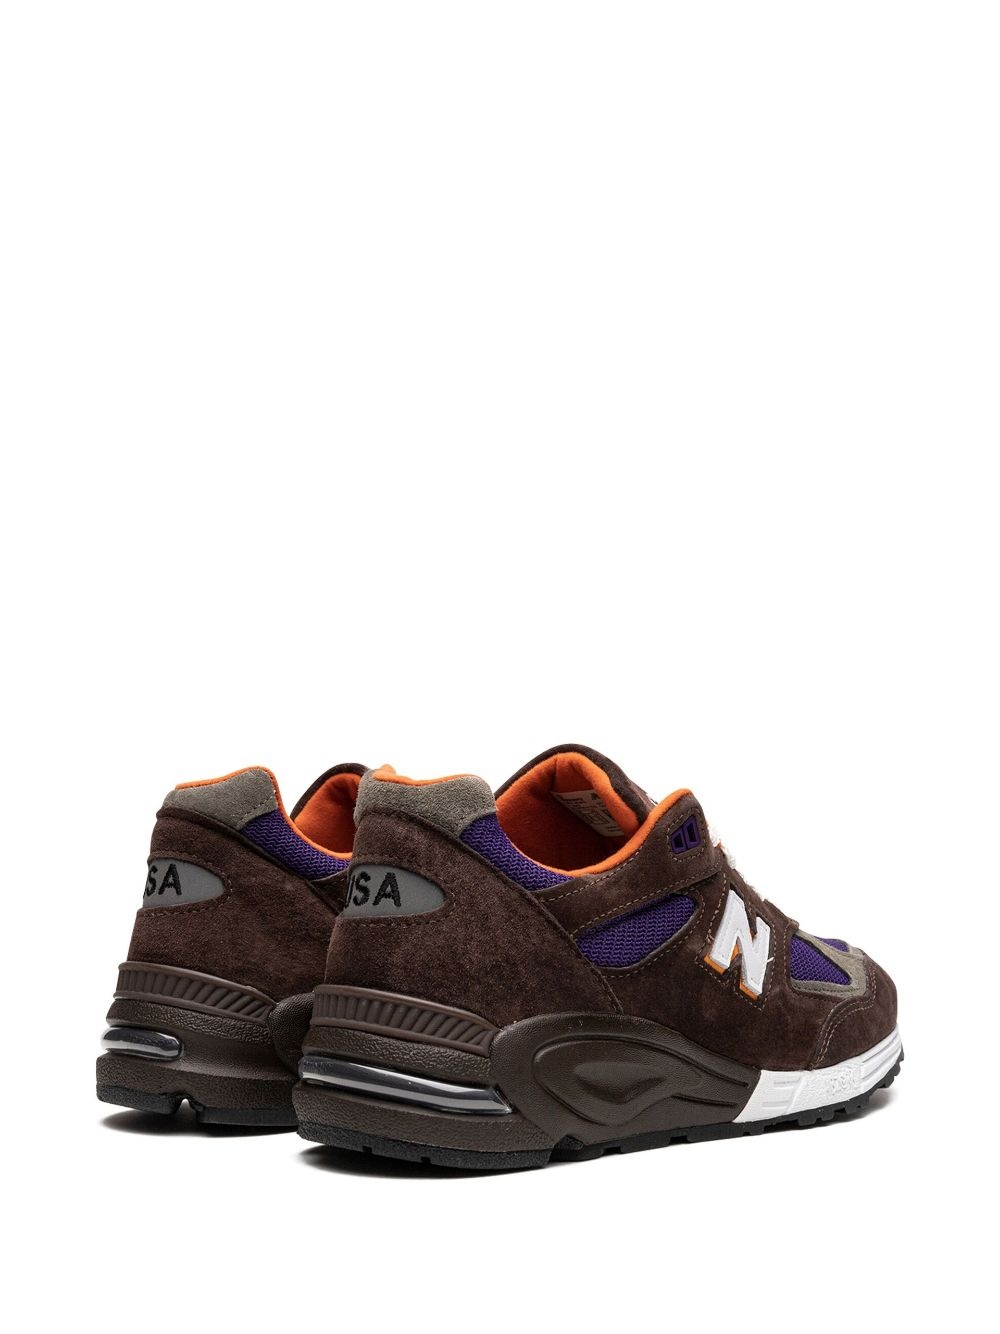 Made in USA 990v2 "Brown/Orange/Purple" sneakers - 3